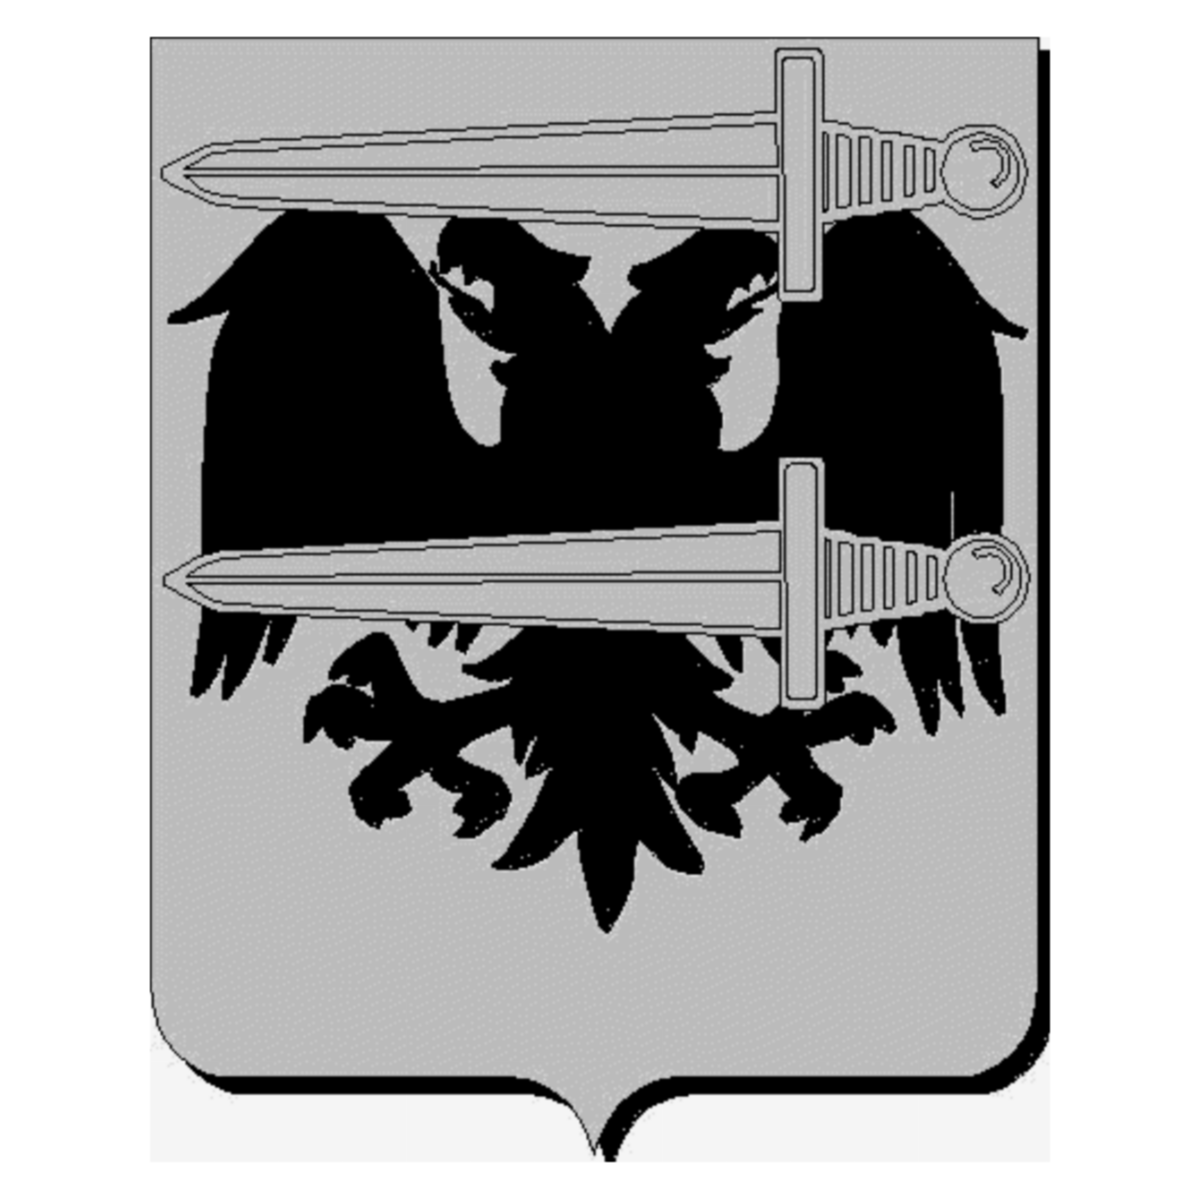 Coat of arms of familyMollo